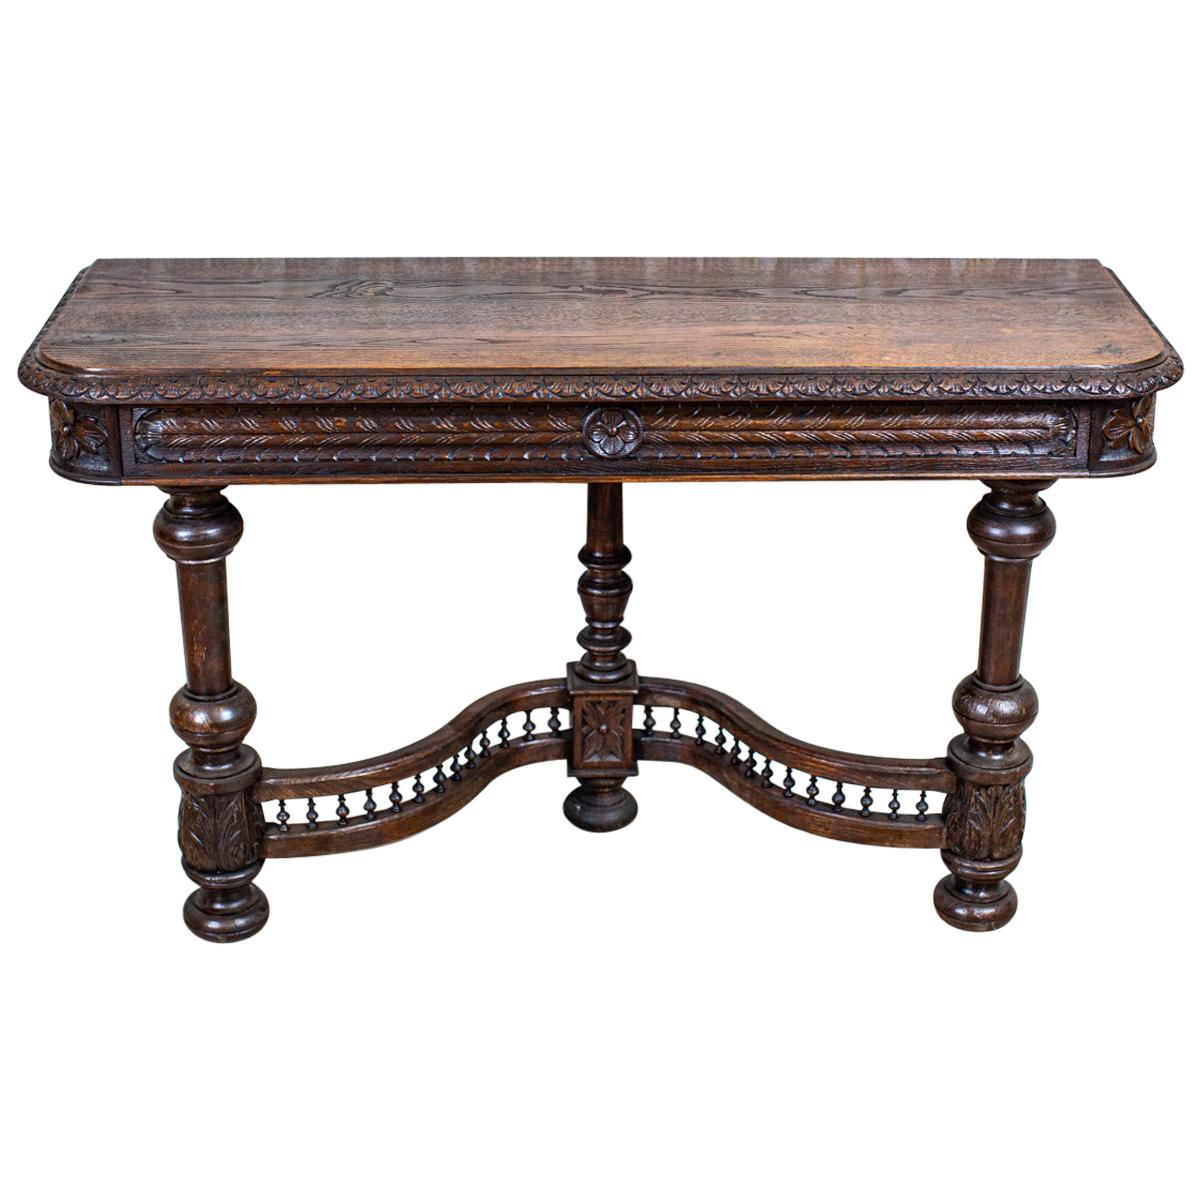 19th-Century Neo-Renaissance Oak Wood and Veneer Console Table in Dark Brown